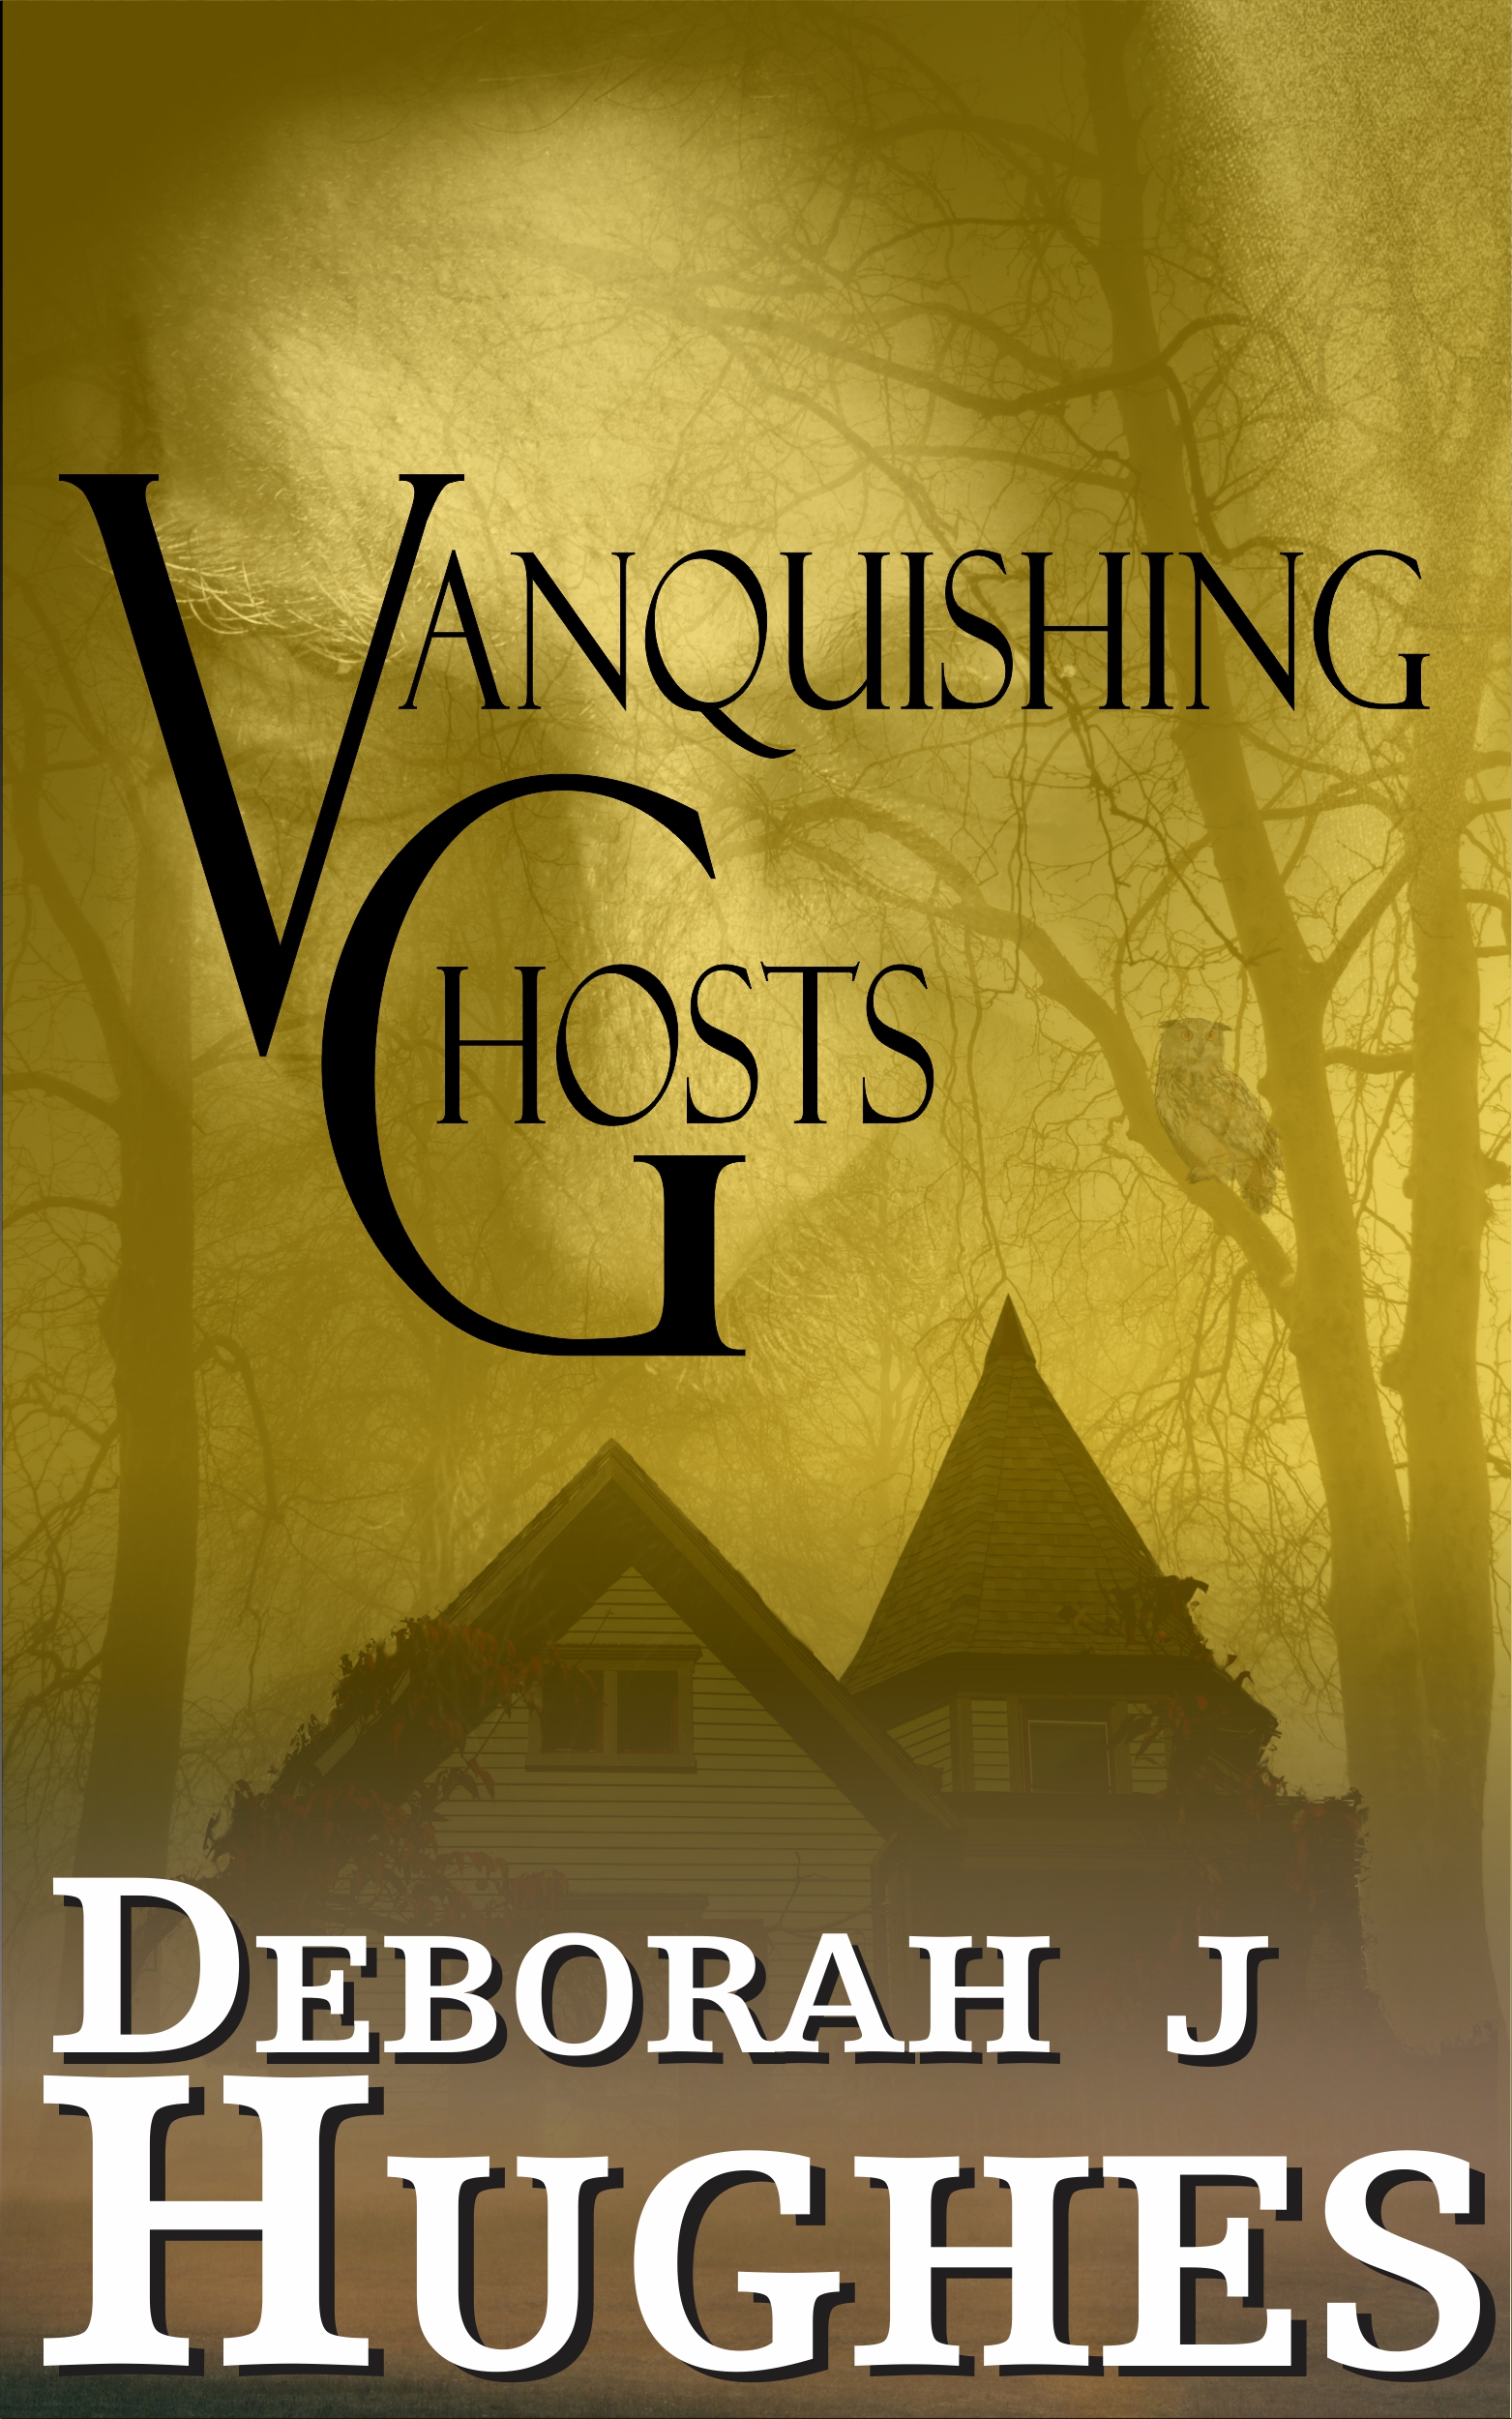 Vanquishing Ghosts (Amazon)